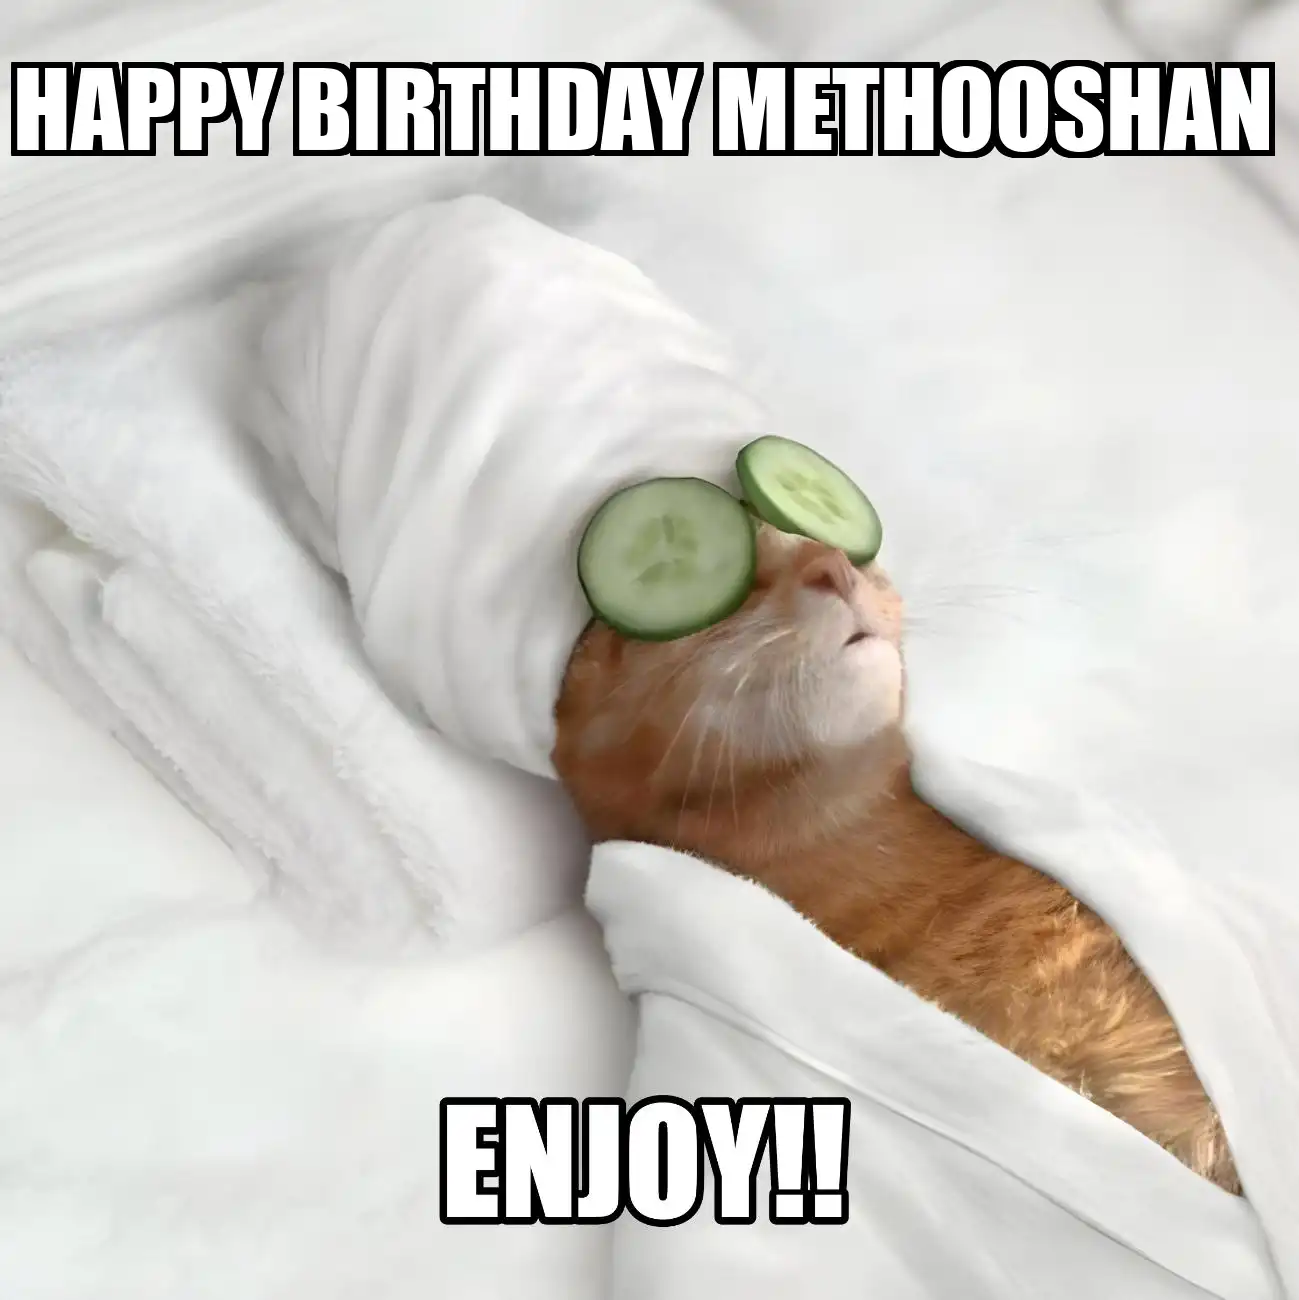 Happy Birthday Methooshan Enjoy Cat Meme